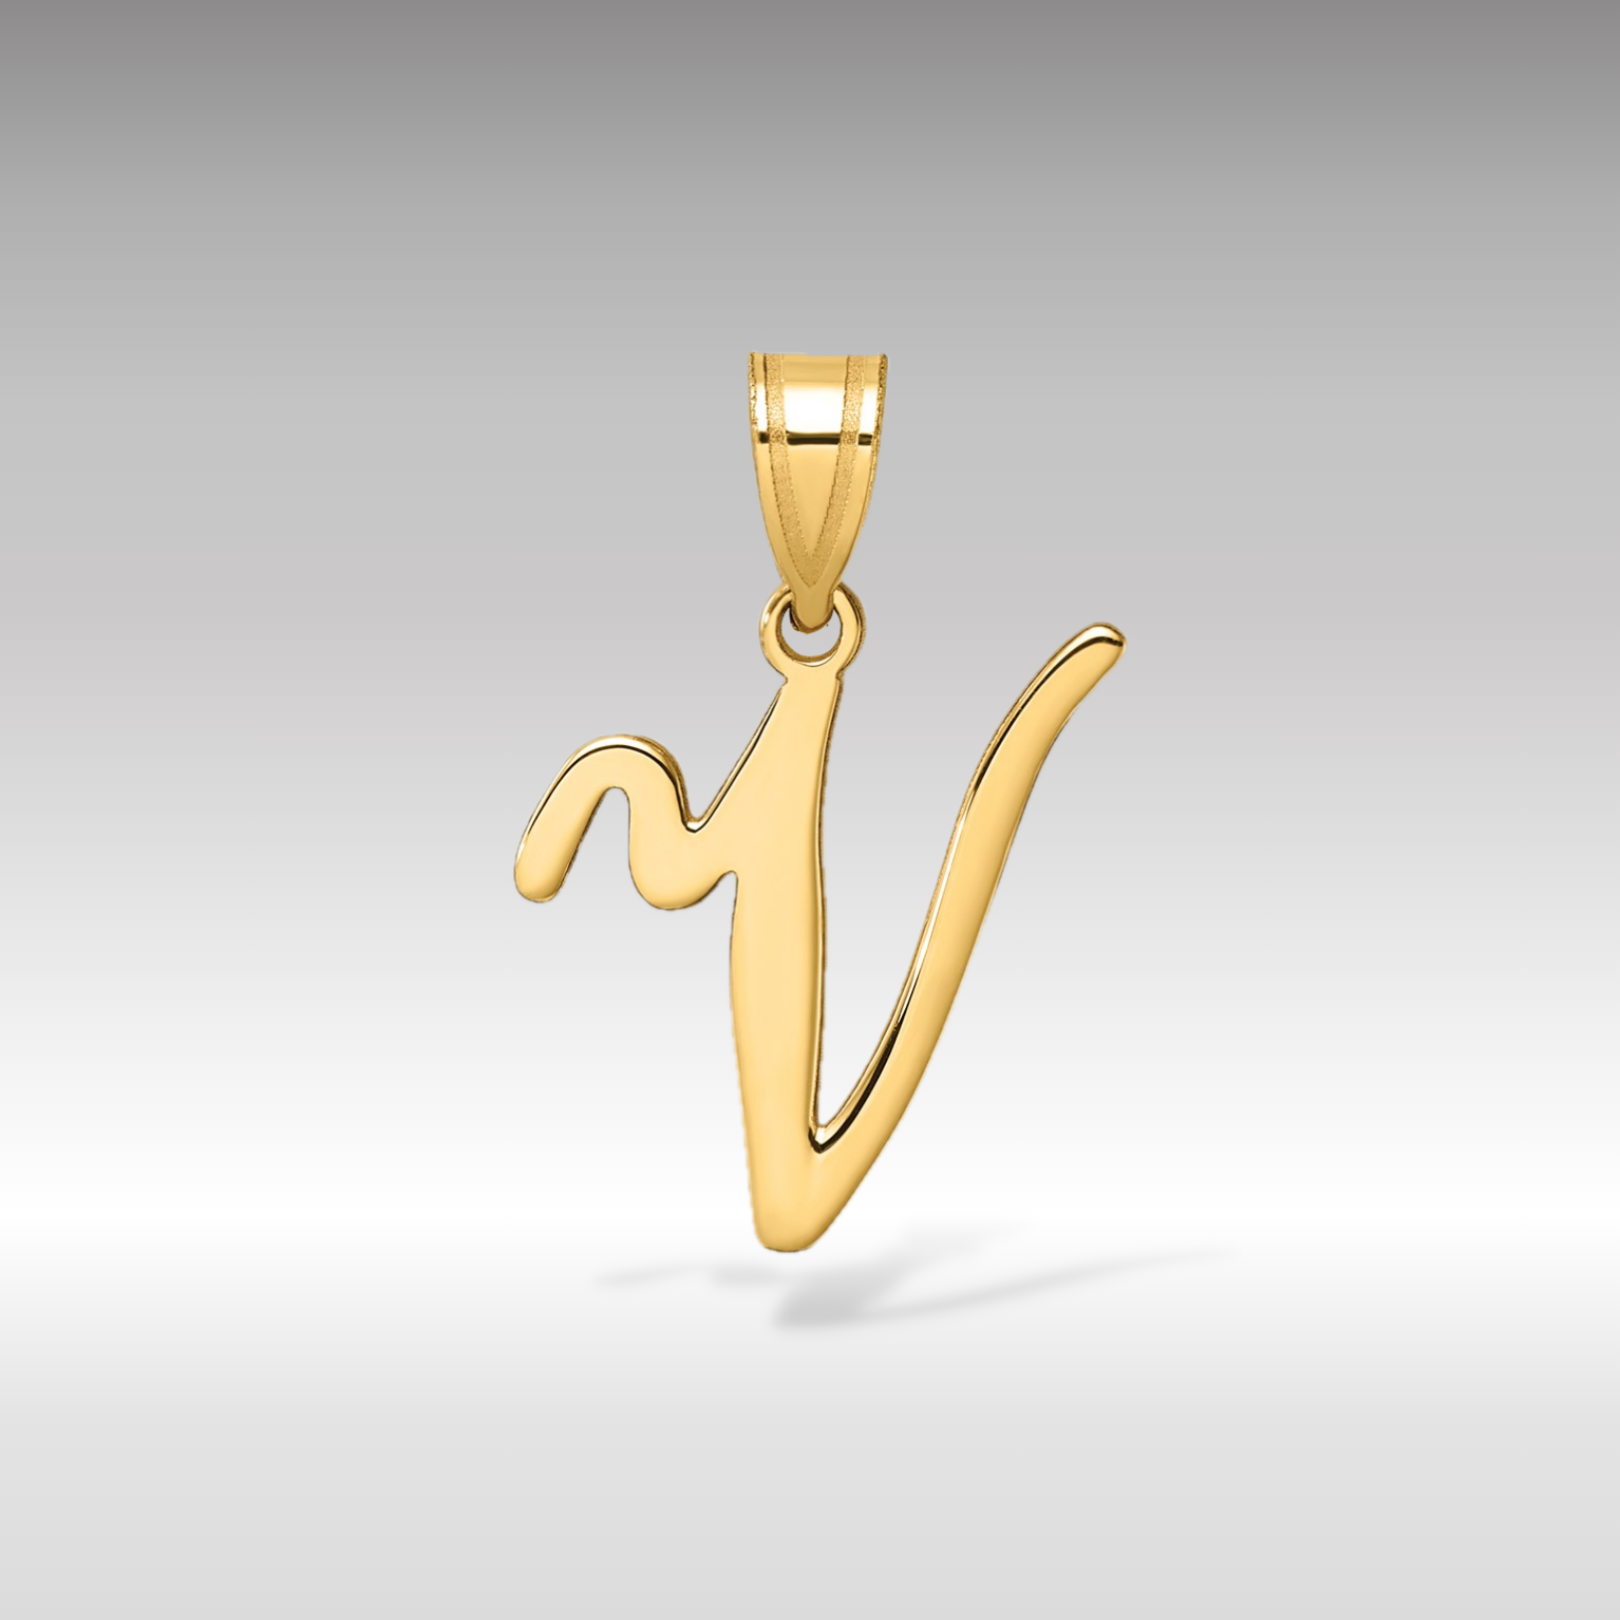 14K Gold Large Letter "V" Script Initial Pendant - Charlie & Co. Jewelry